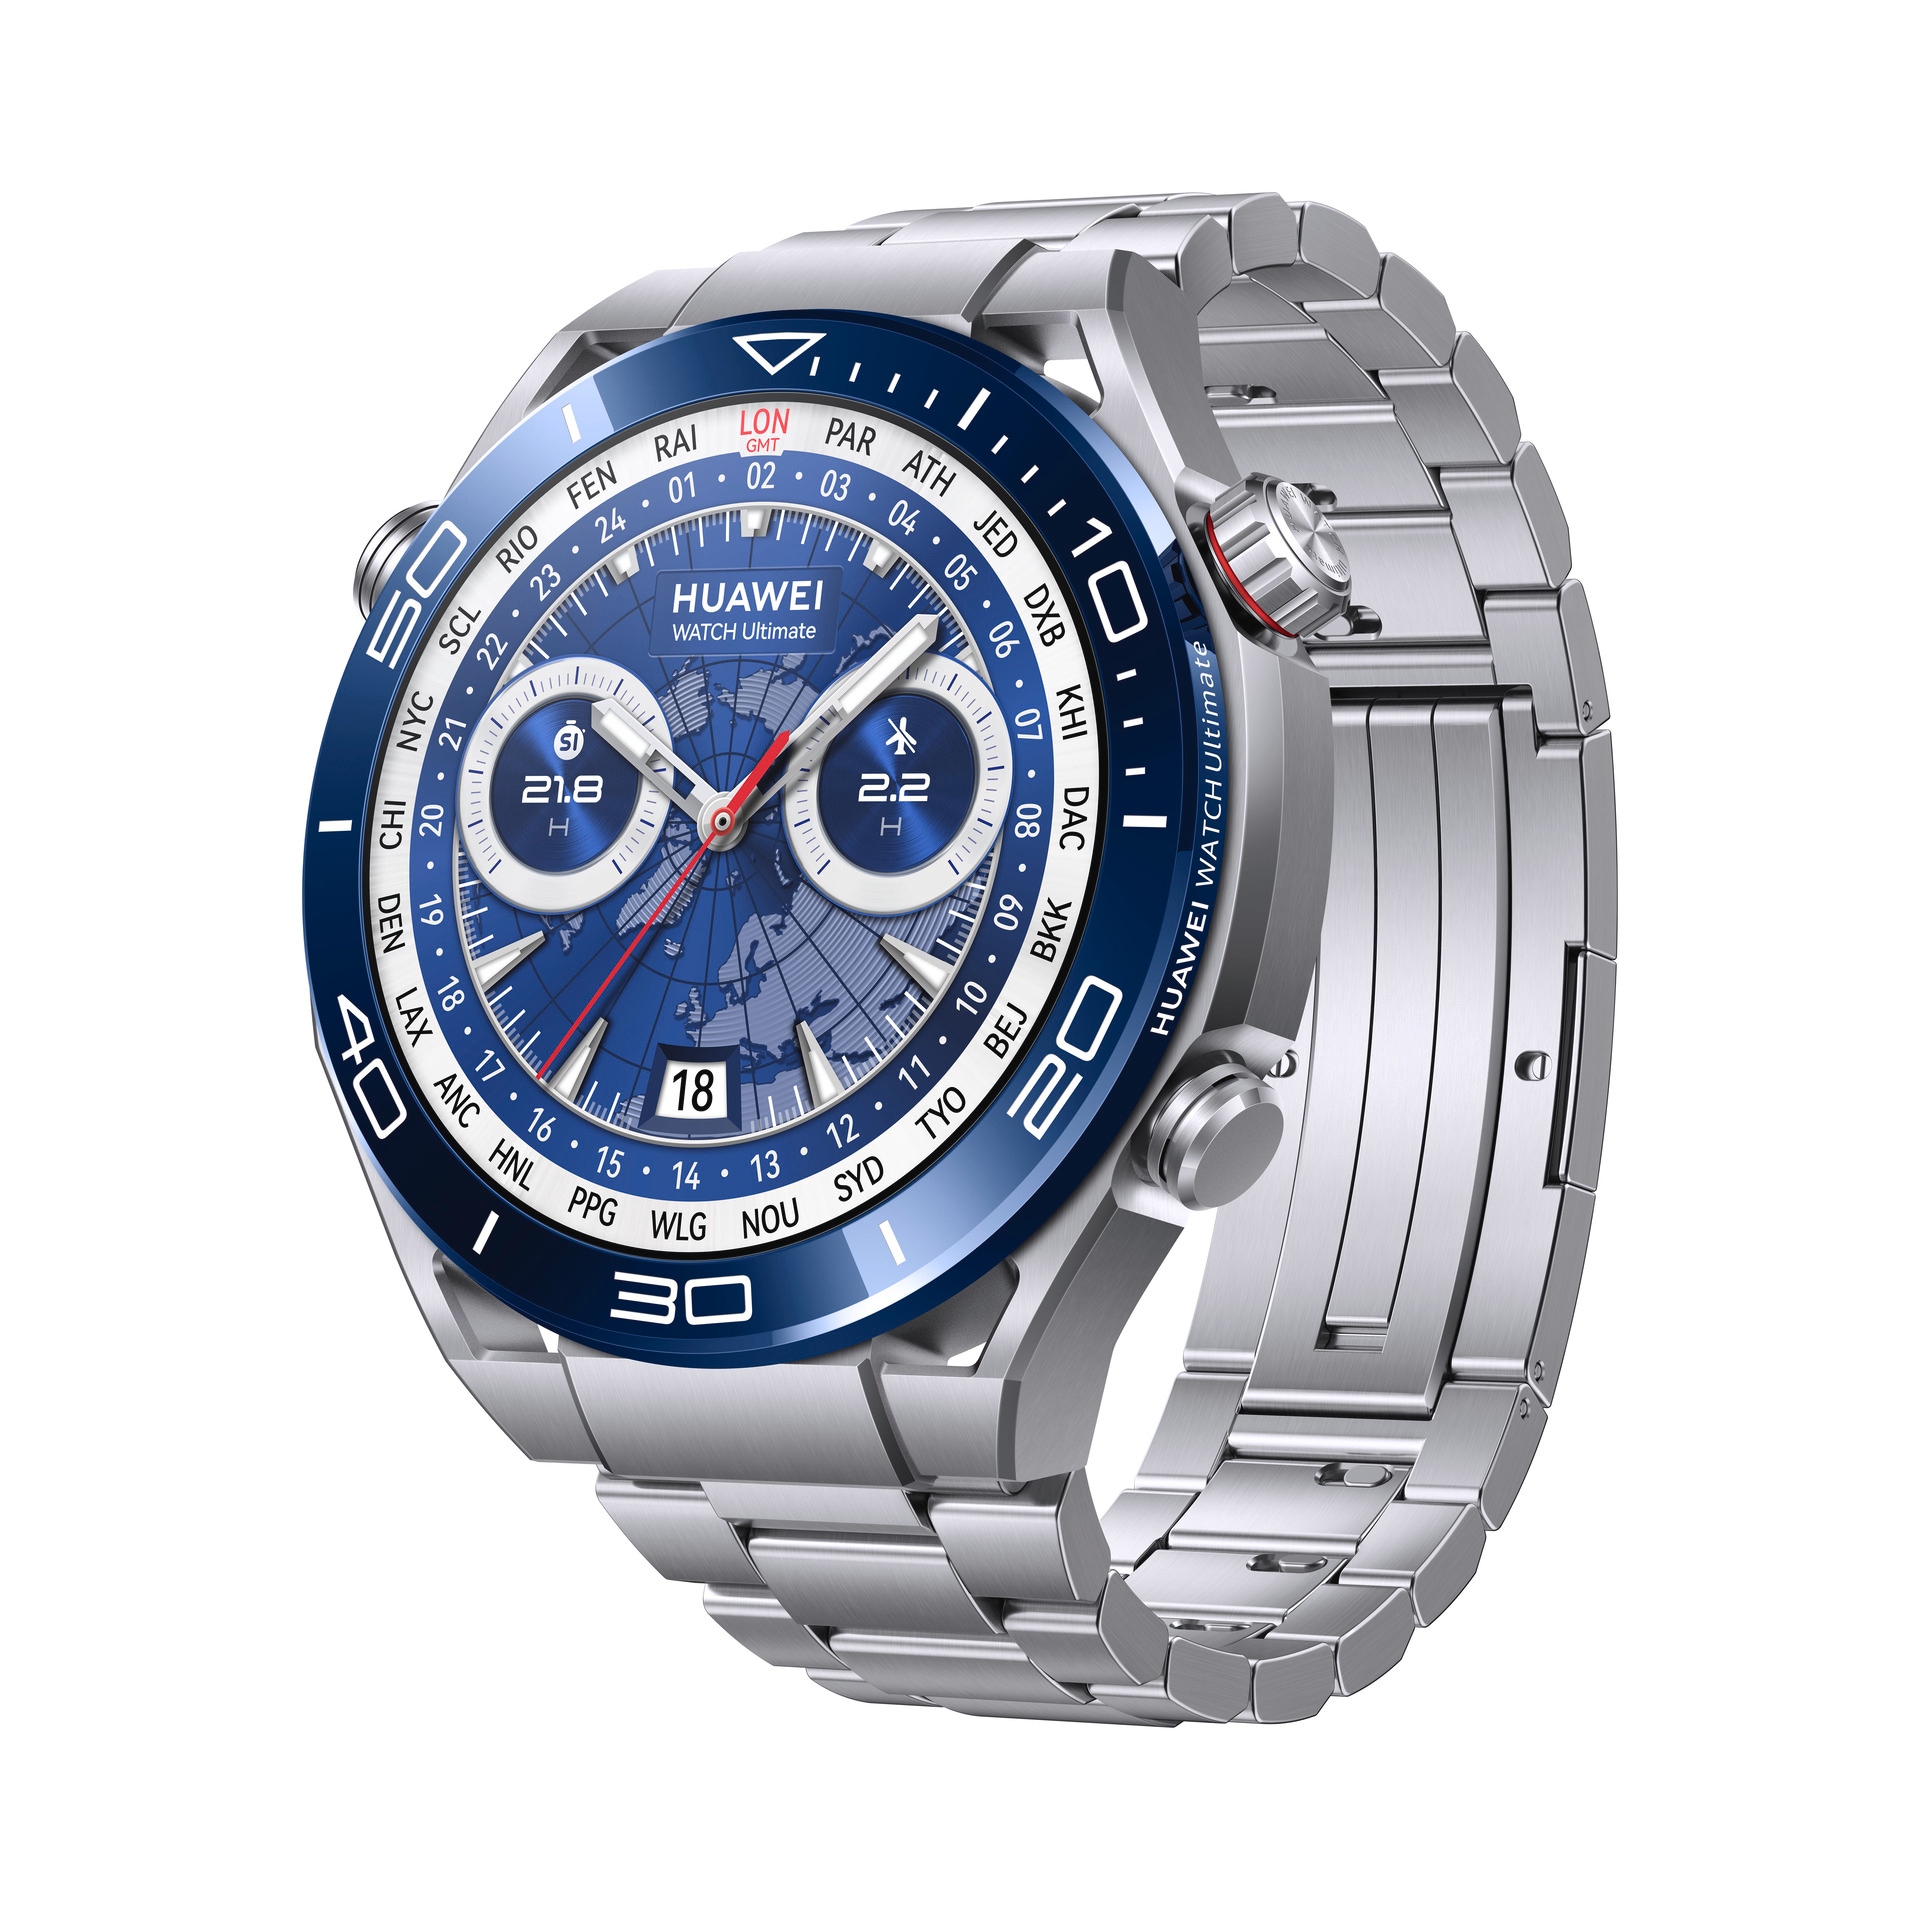 Huawei Smartwatch »Watch Ultimate«, (Proprietär) bestellen bei OTTO